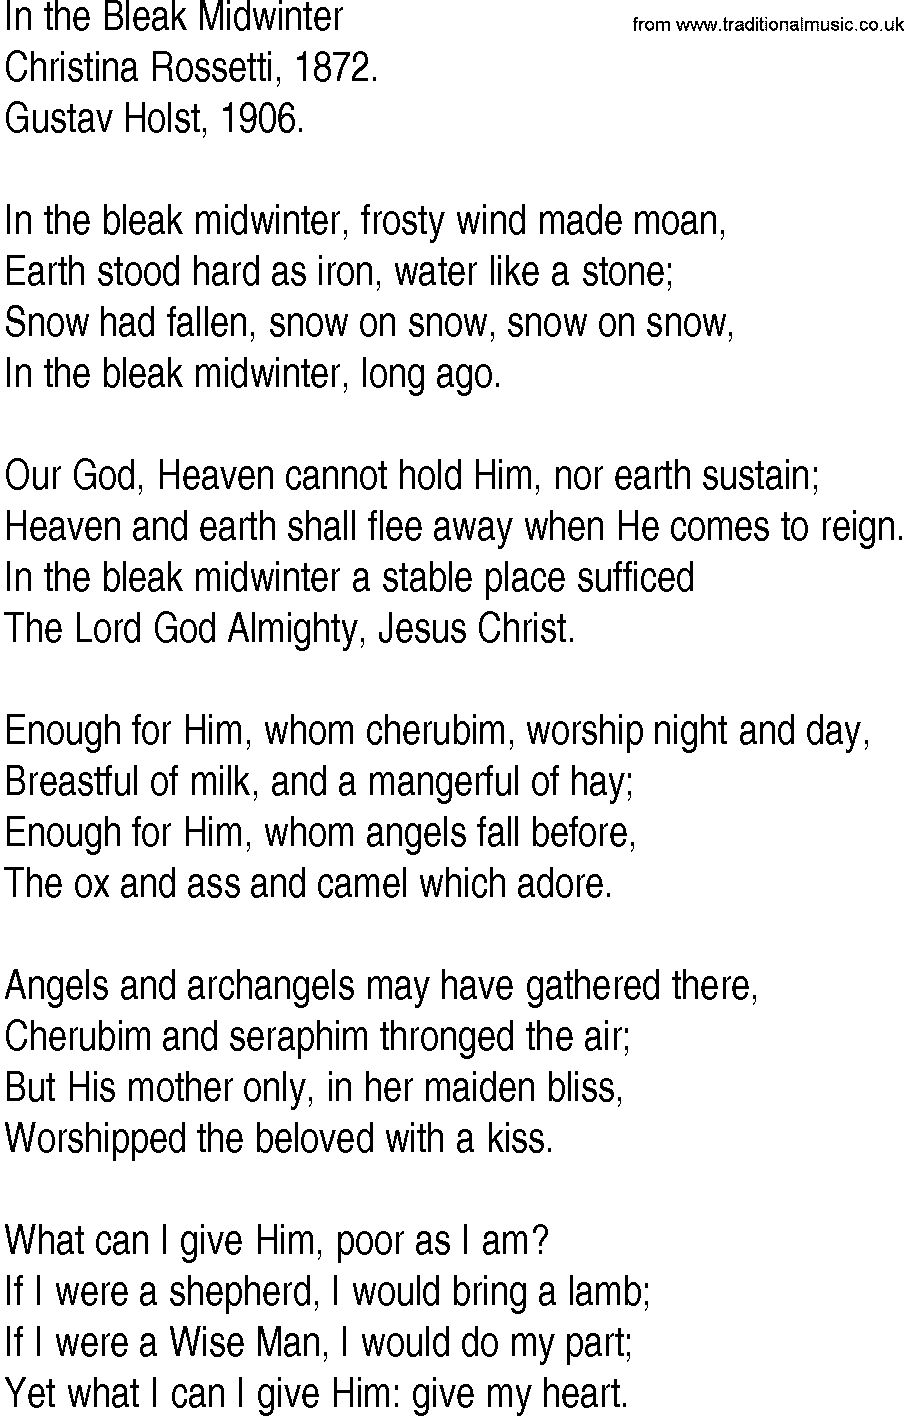 Hymn and Gospel Song: In the Bleak Midwinter by Christina Rossetti lyrics